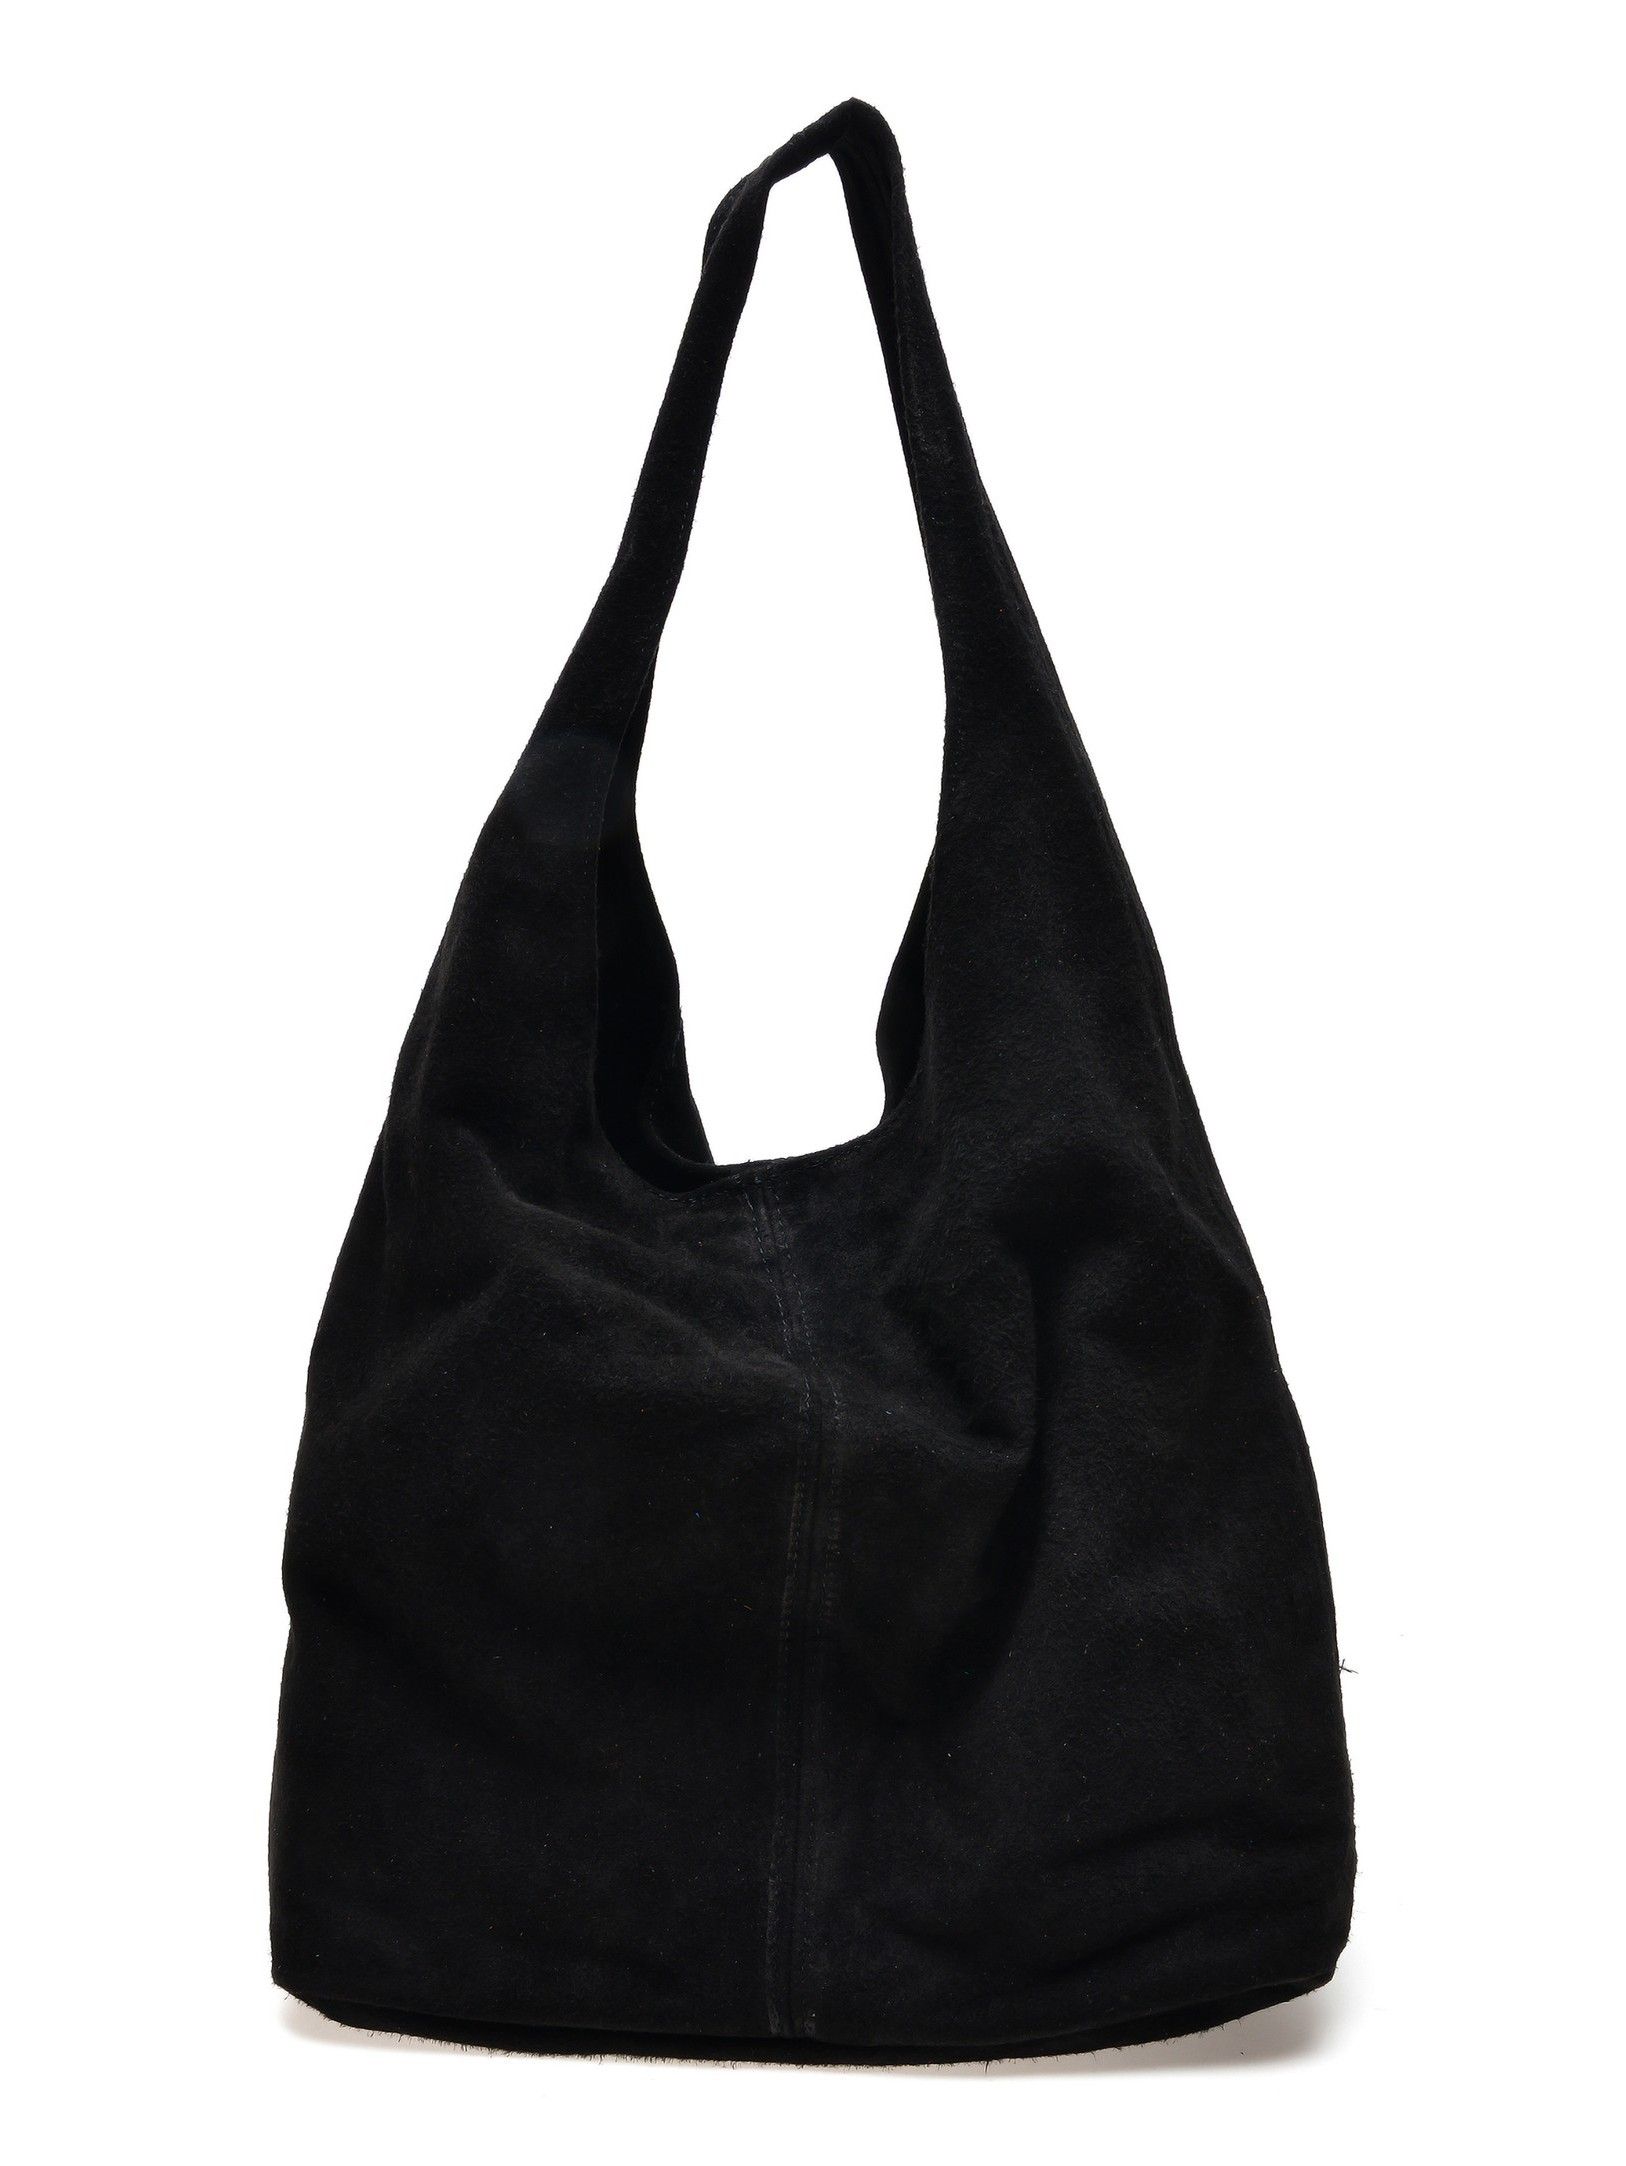 Hobo Bag
100% cow leather
Magnetic closure
Inner purse pocket
Dimensions(L):33x44x15 cm
Handle:46 cm
Shoulder strap:/